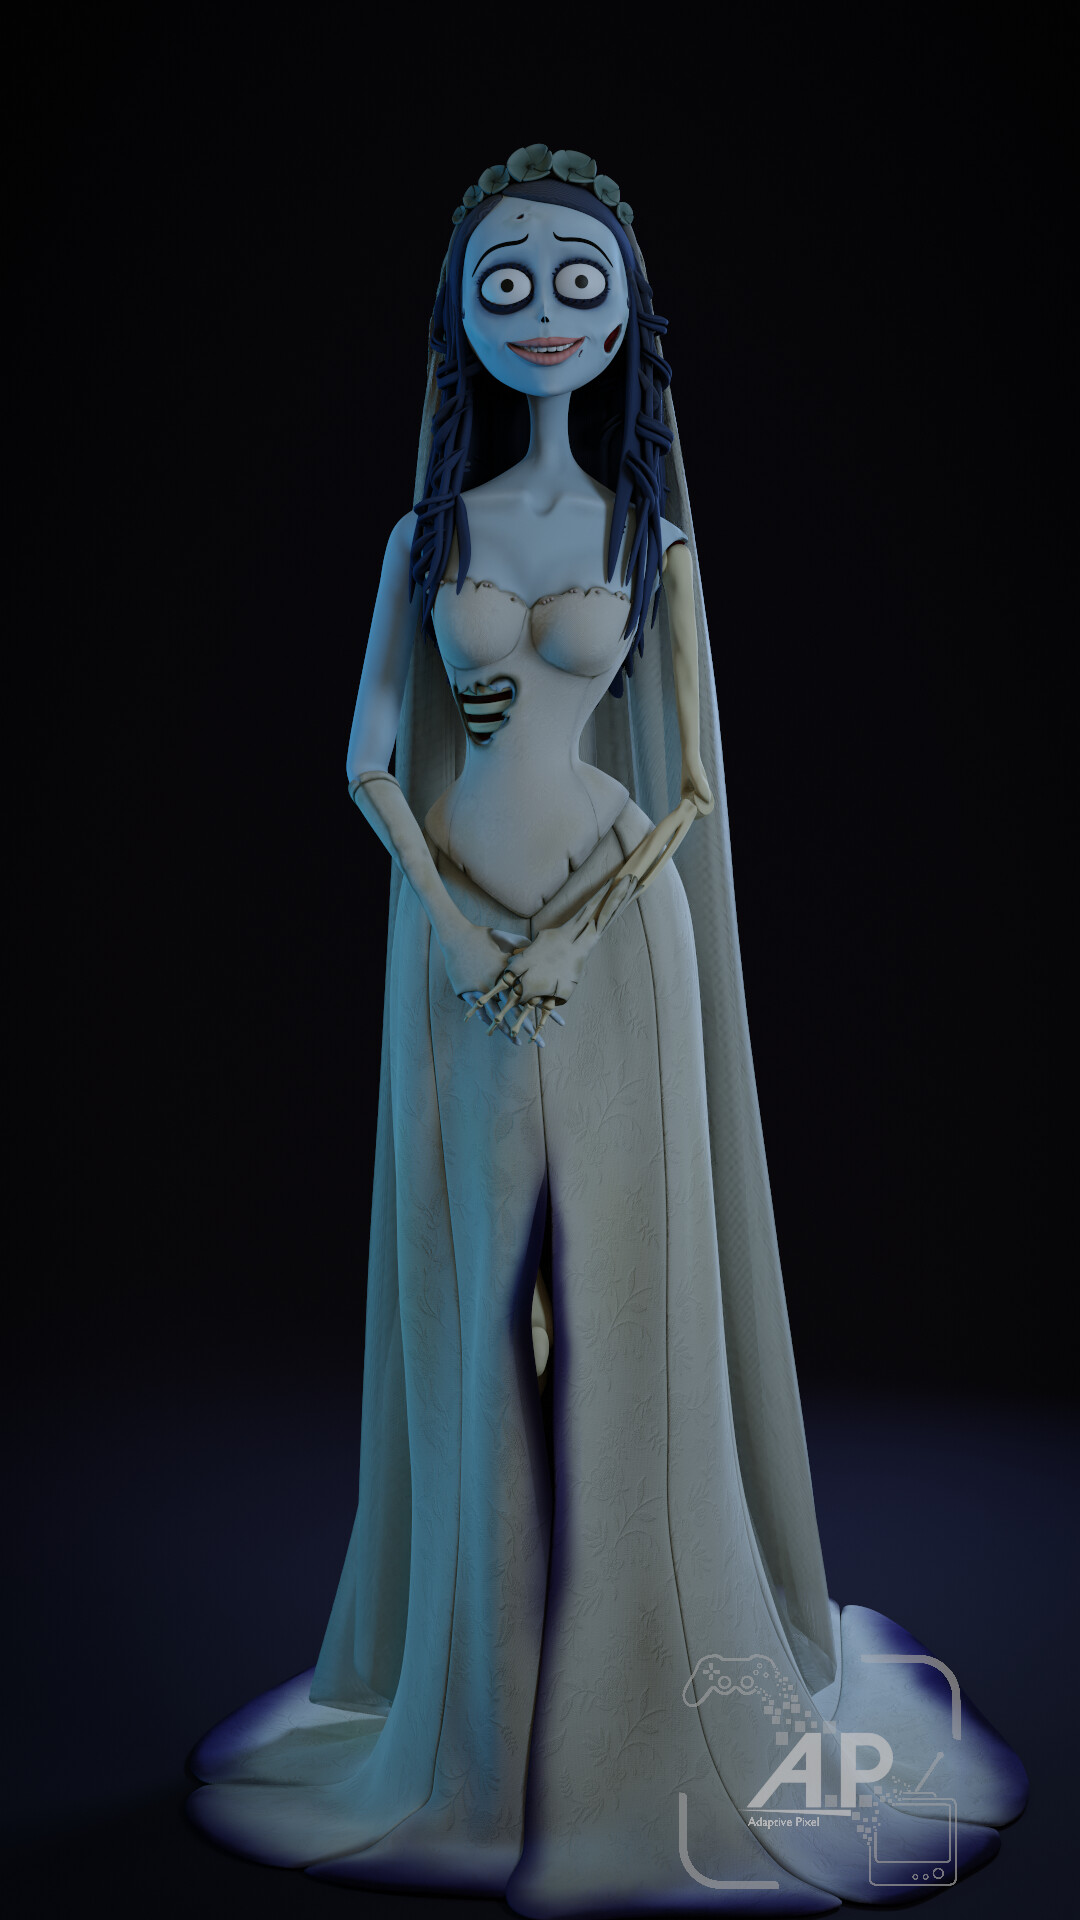 ArtStation - Corpse Bride - Character Model